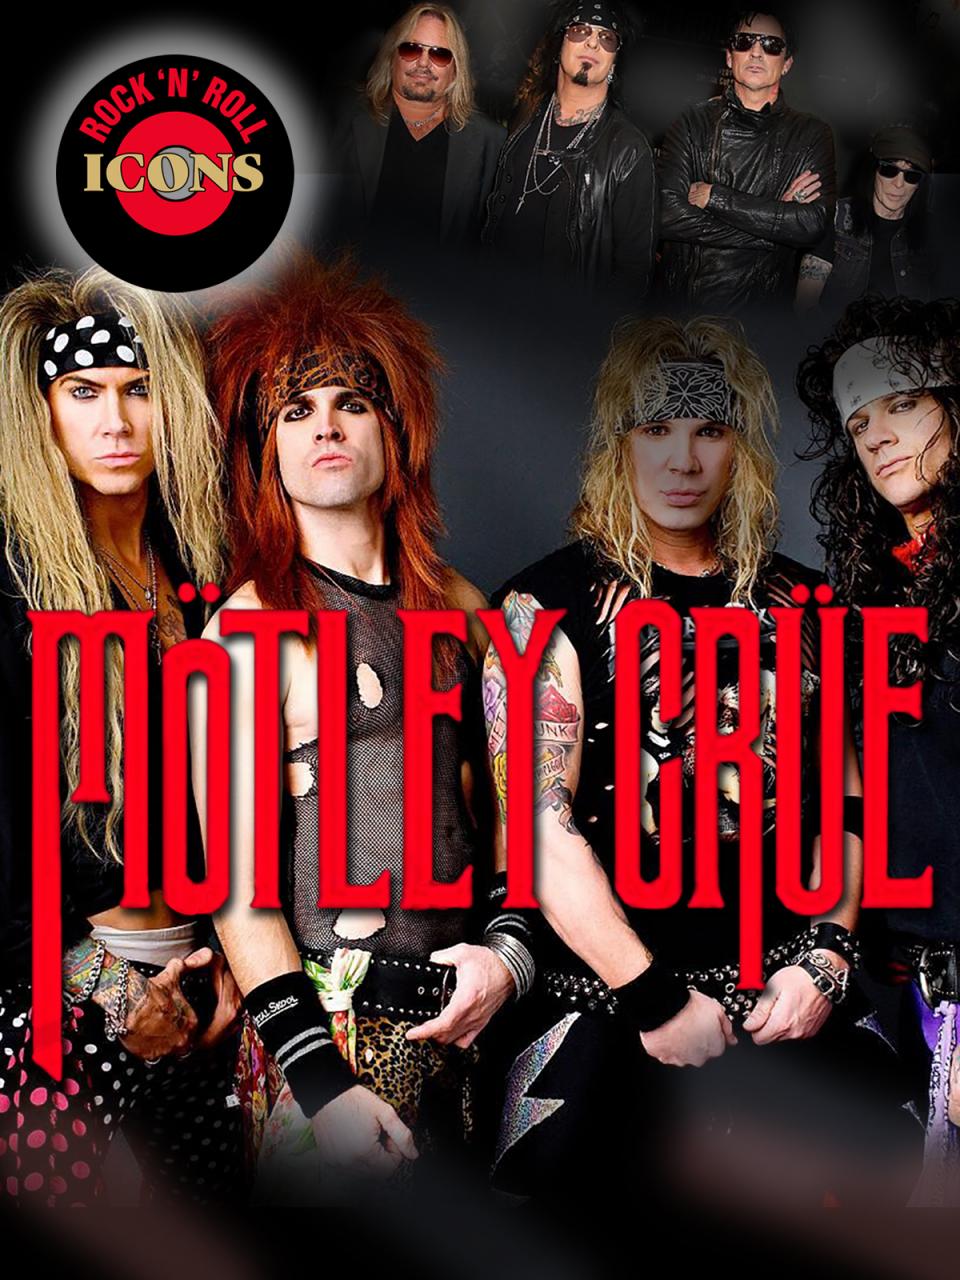 Rock 'n Roll Icons: Motley Crew